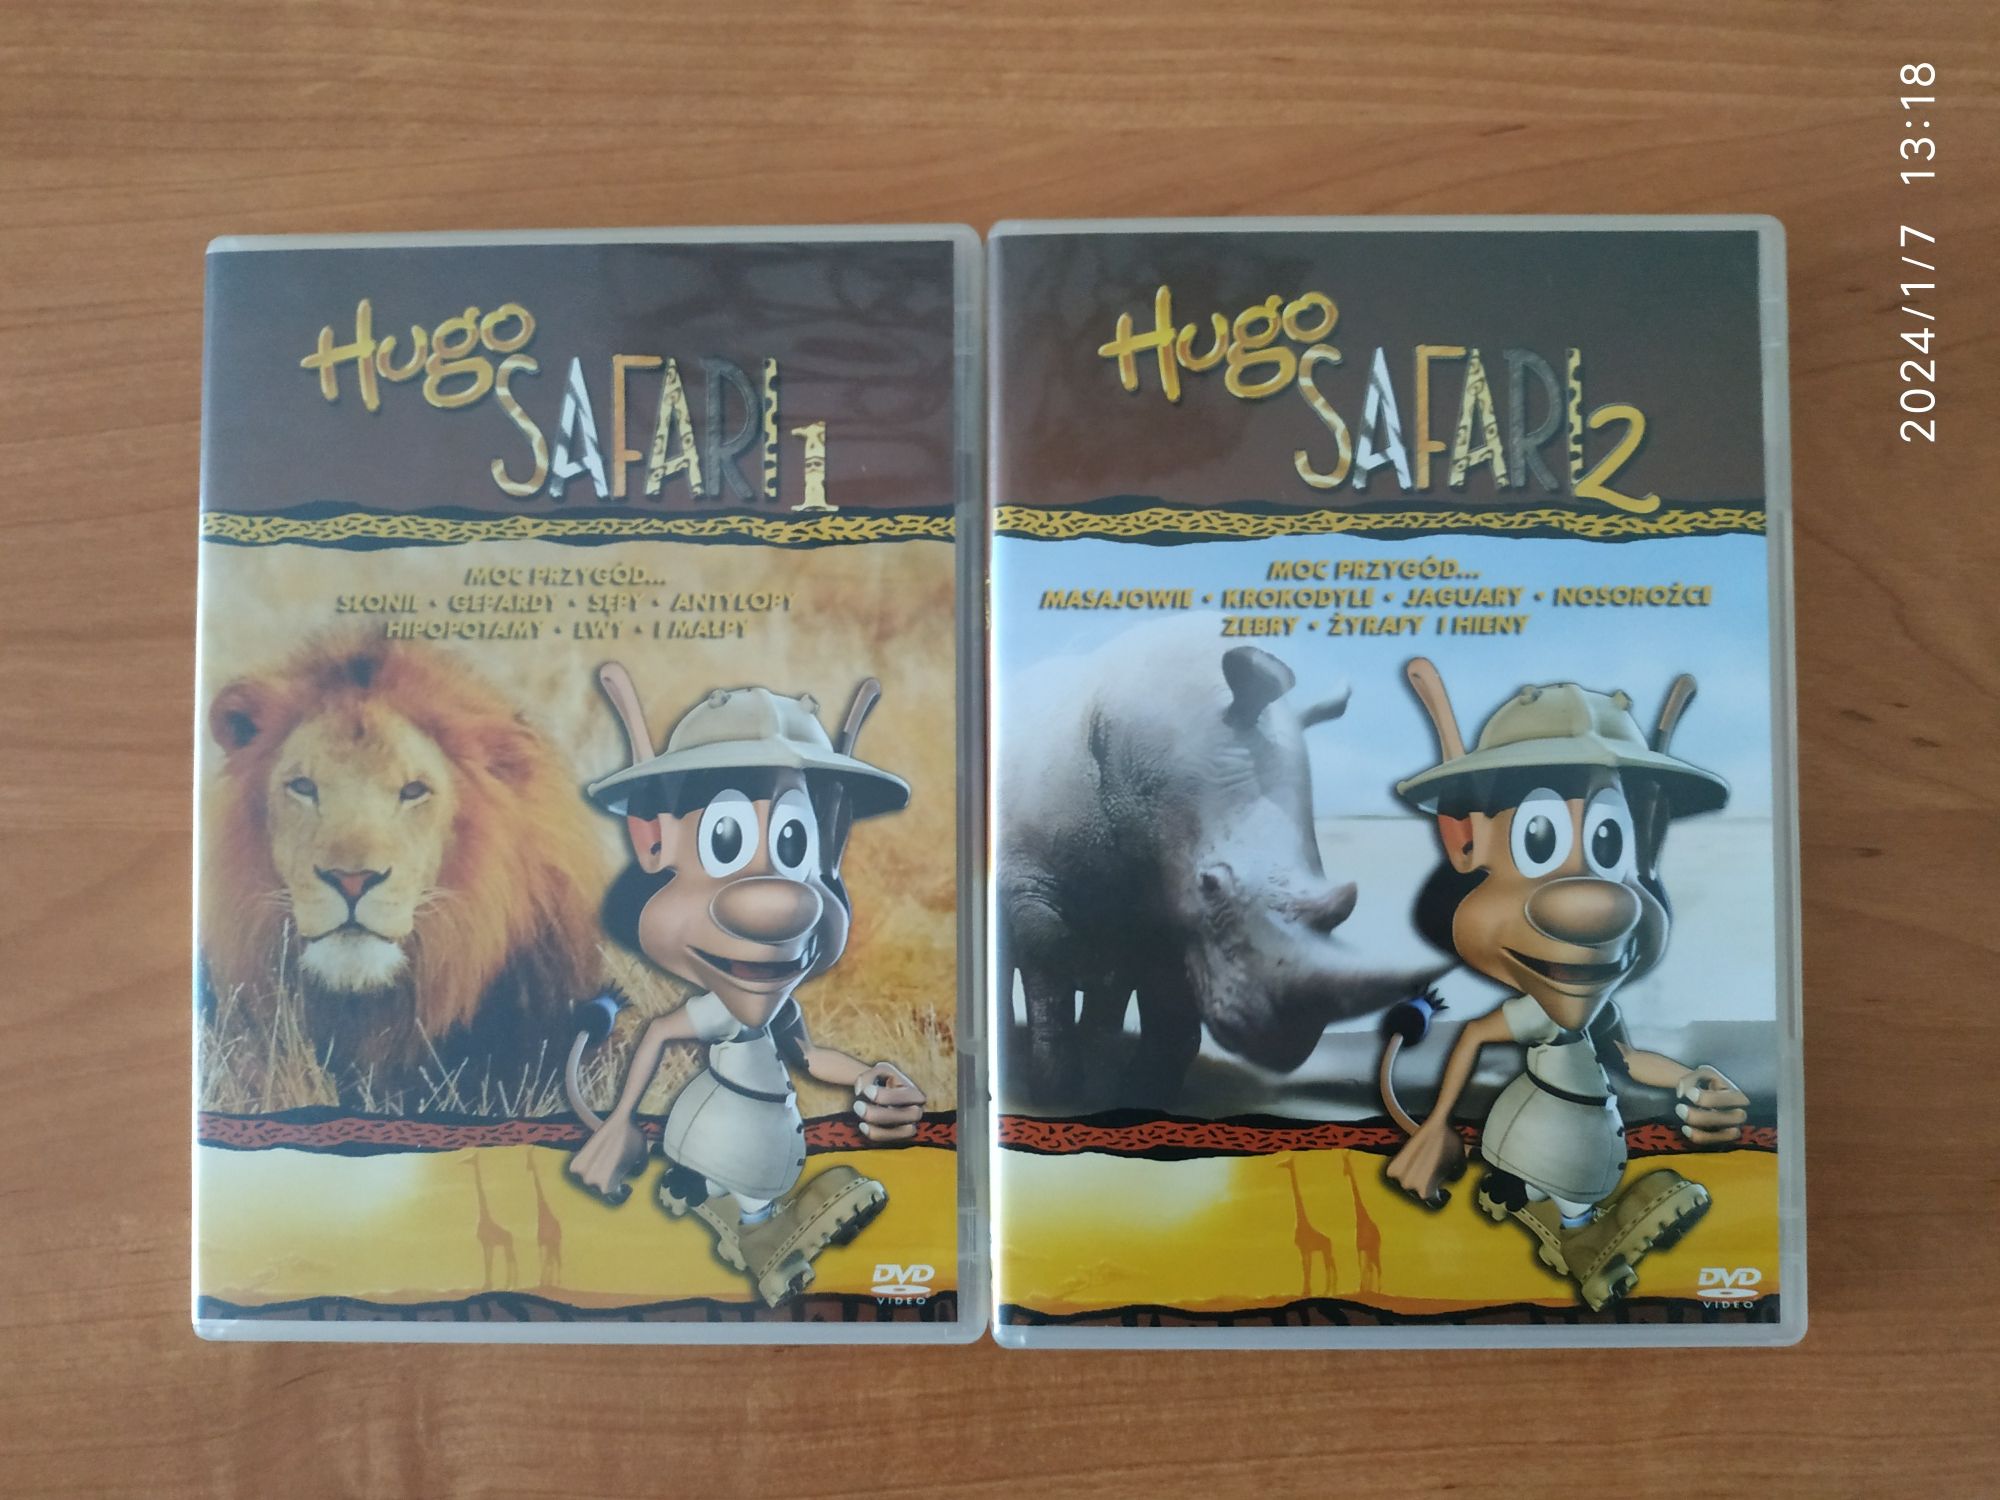 Hugo Safari 1 i 2 - zestaw 2 płyt DVD